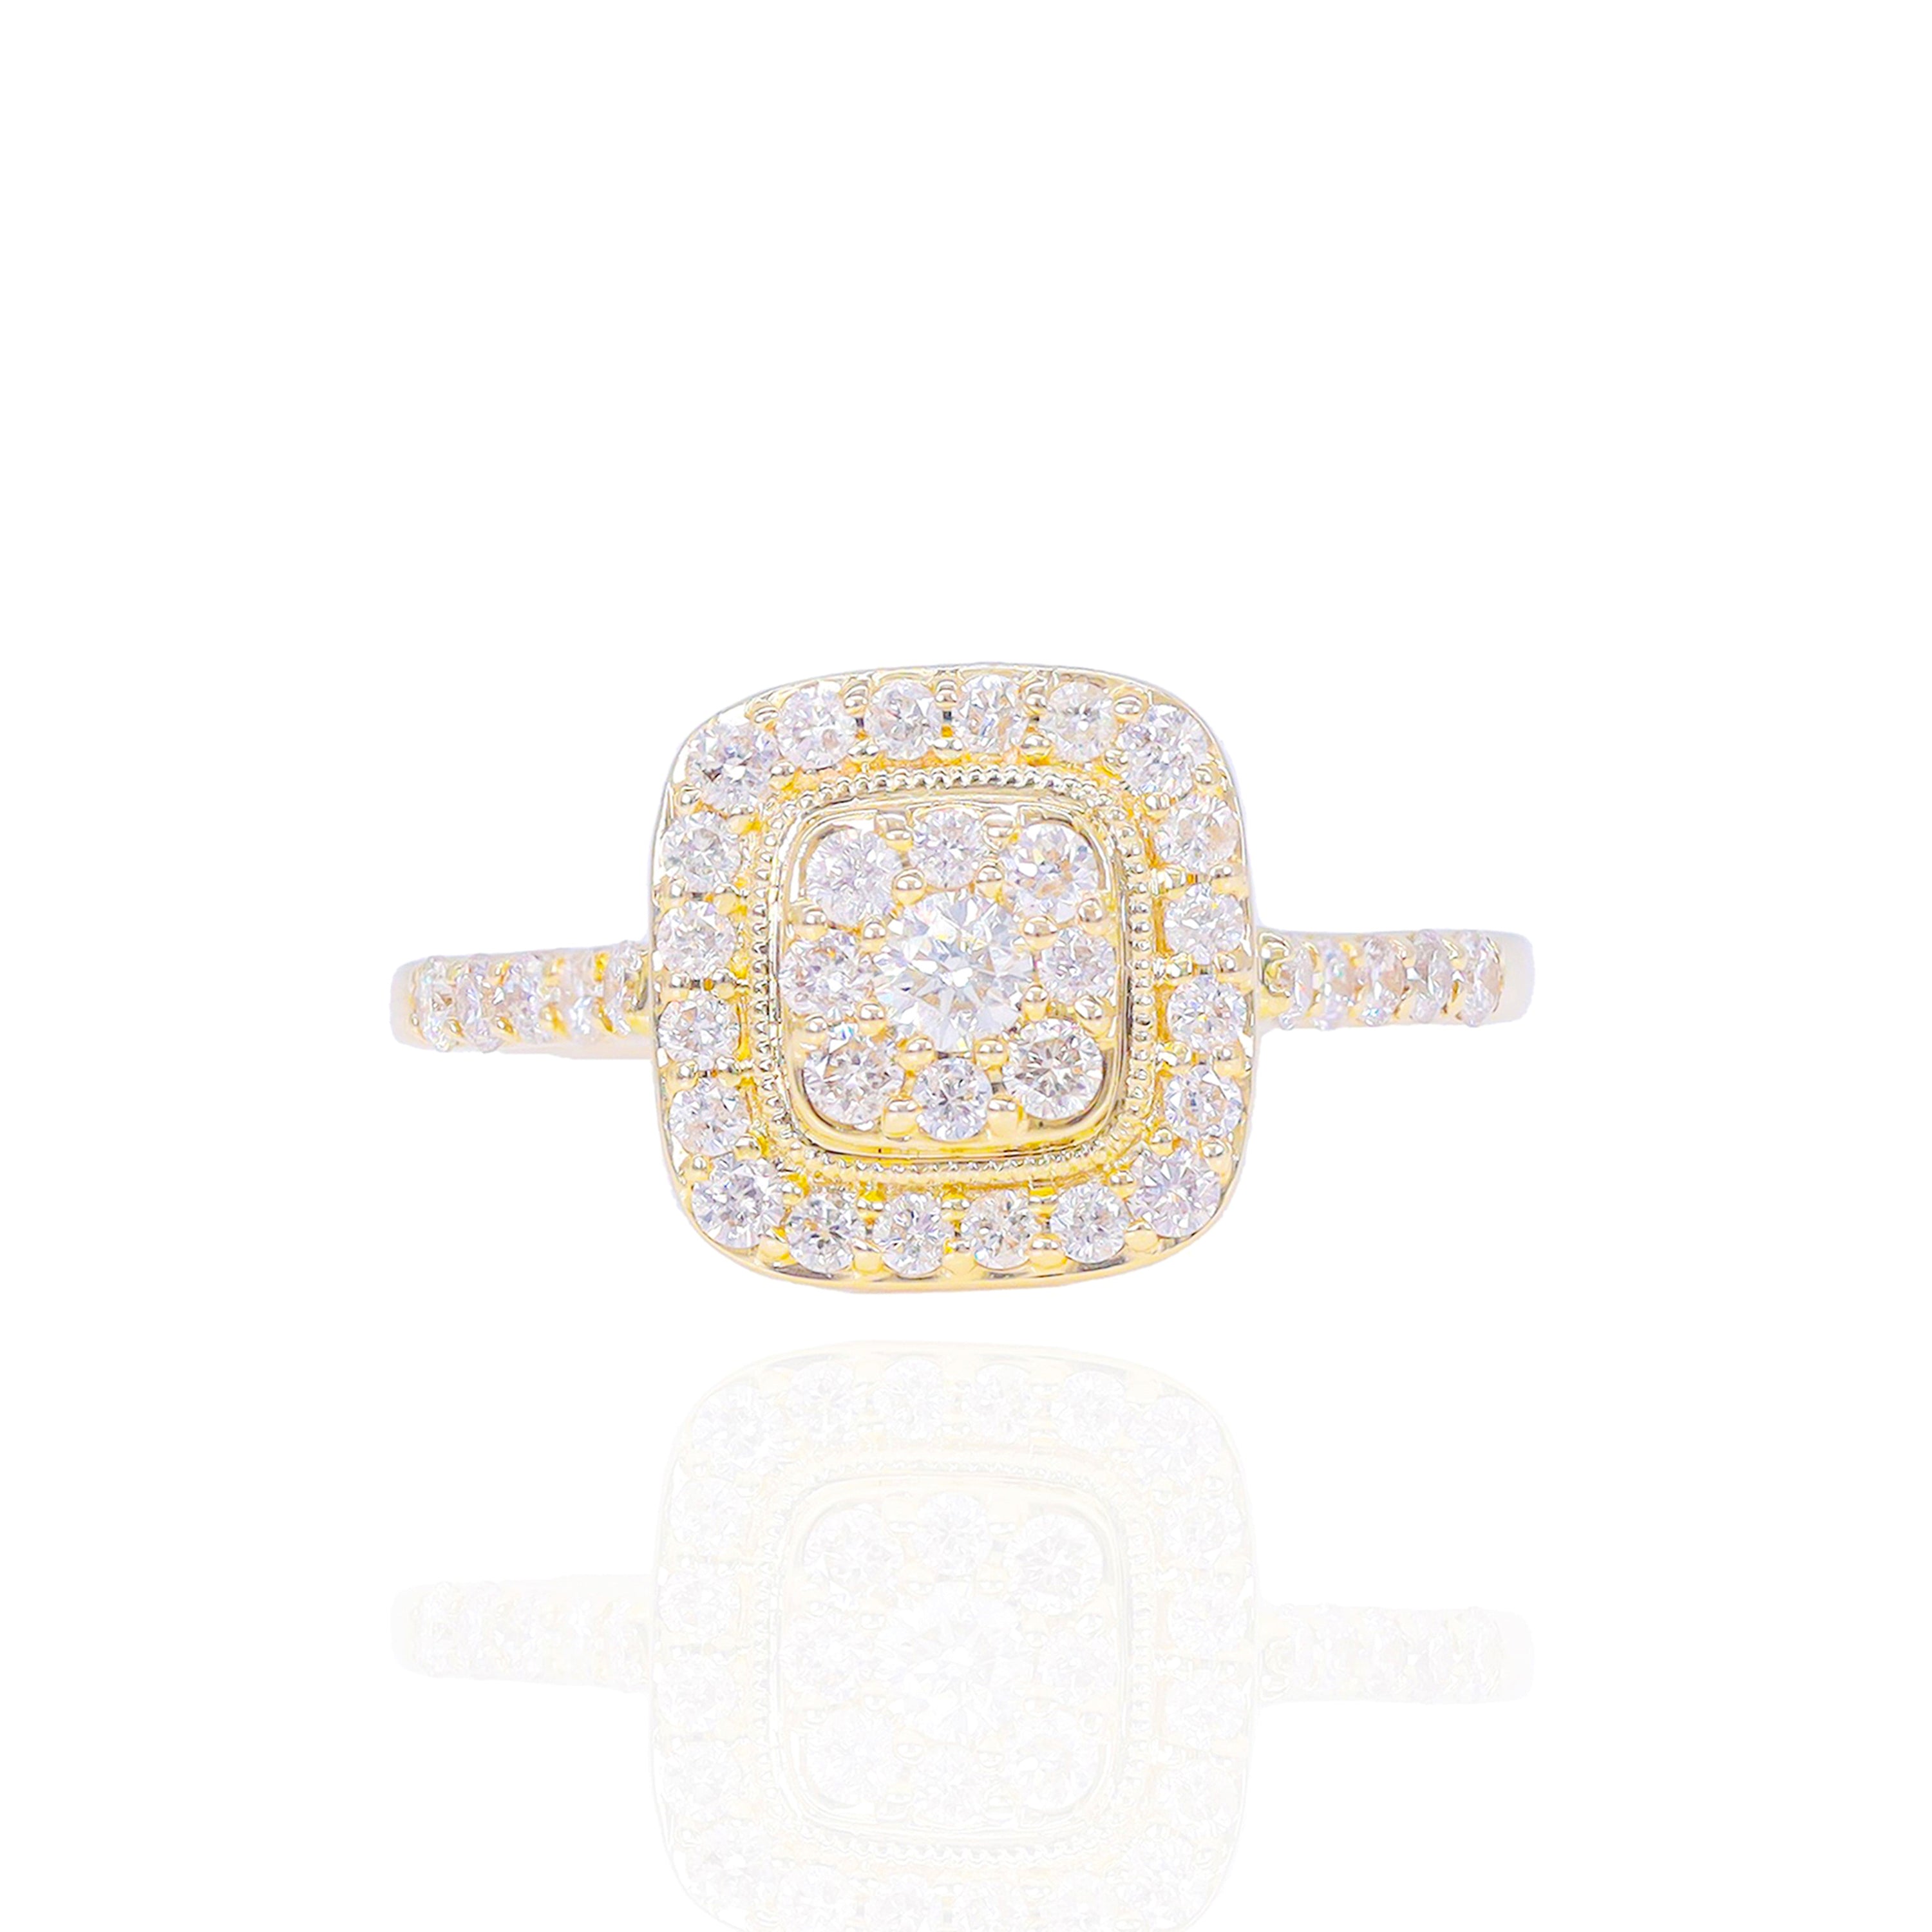 Princess Shaped with Halo Diamond Engagement Ring